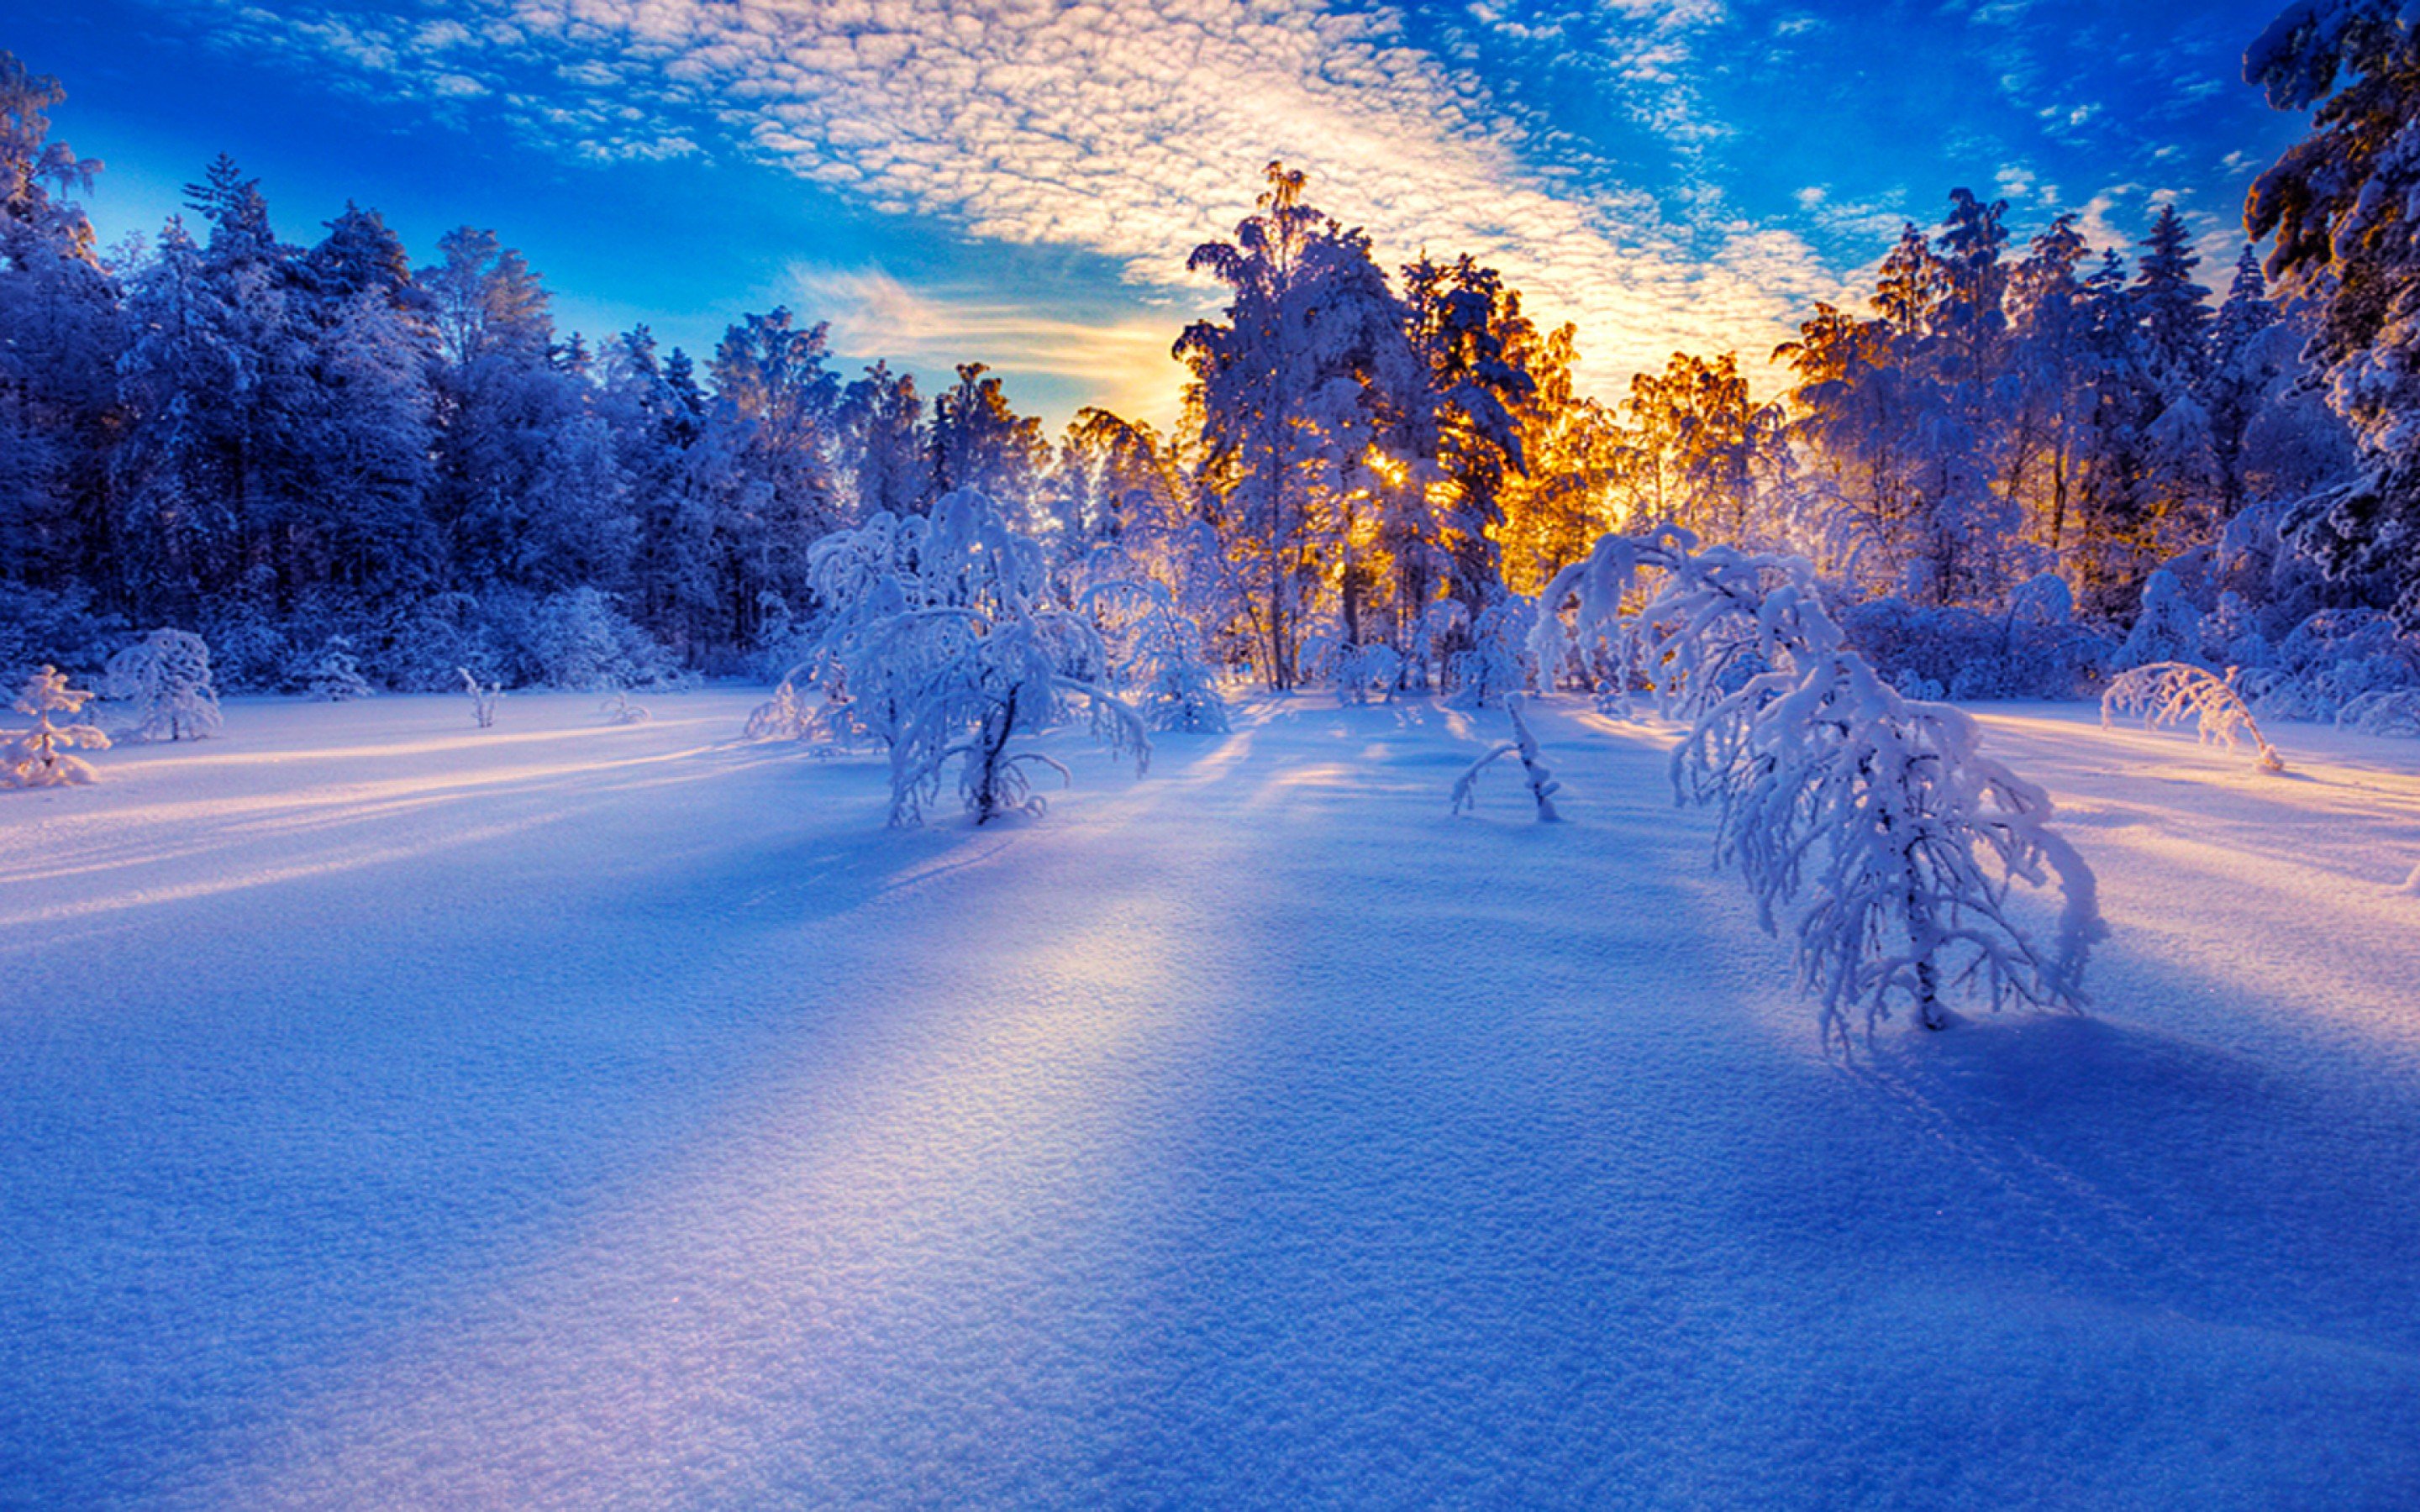 Snow is beautiful. Зимний пейзаж. Красивая зима. Снежный пейзаж. Красивая Снежная зима.